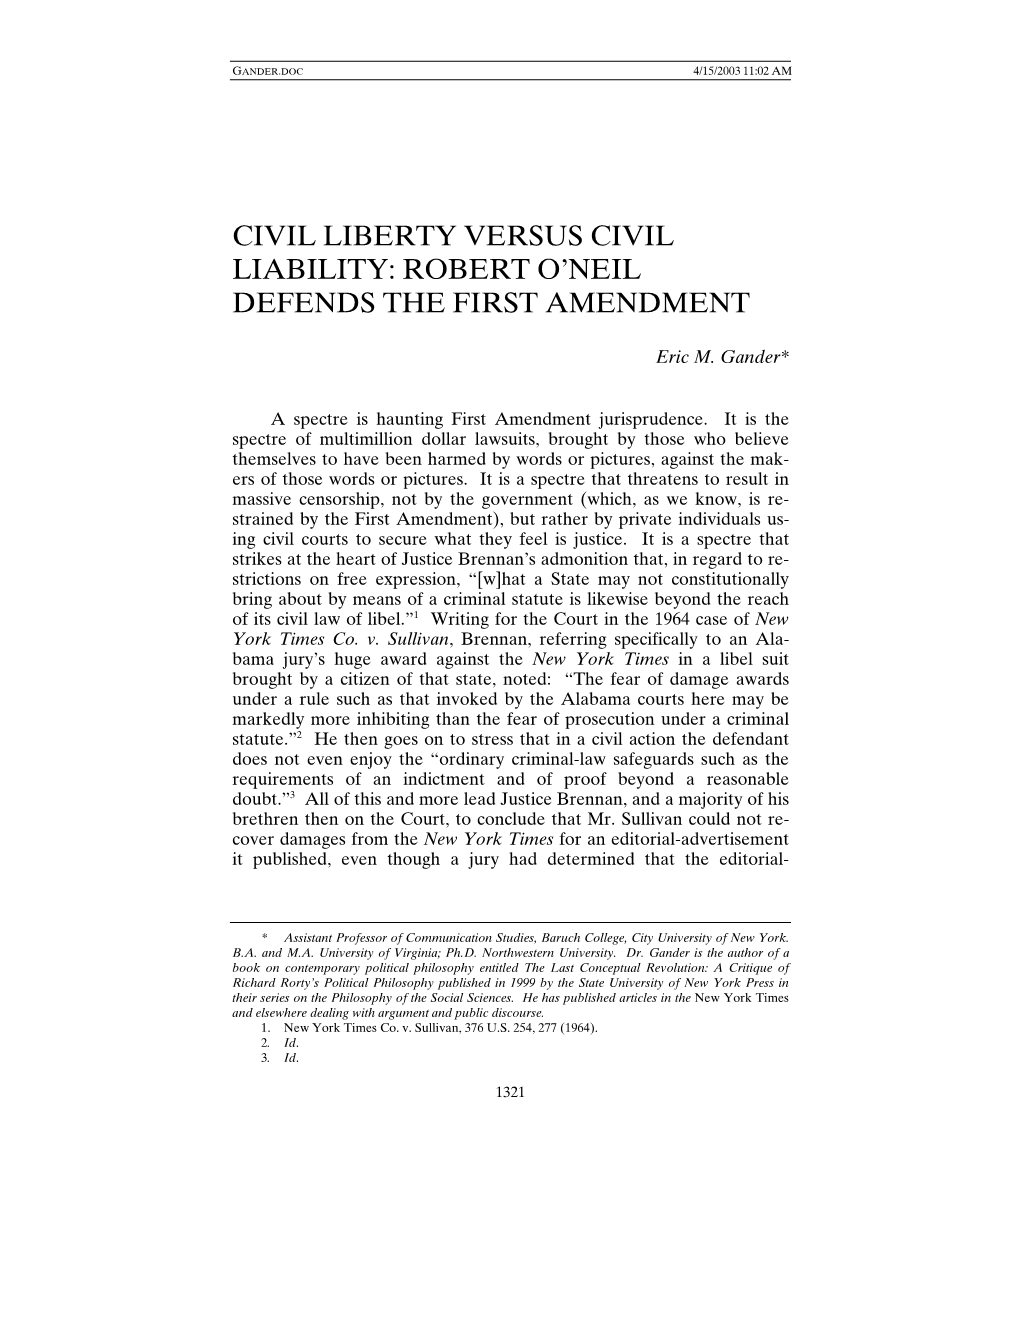 Civil Liberty Versus Civil Liability: Robert O'neil Defends the First Amendment